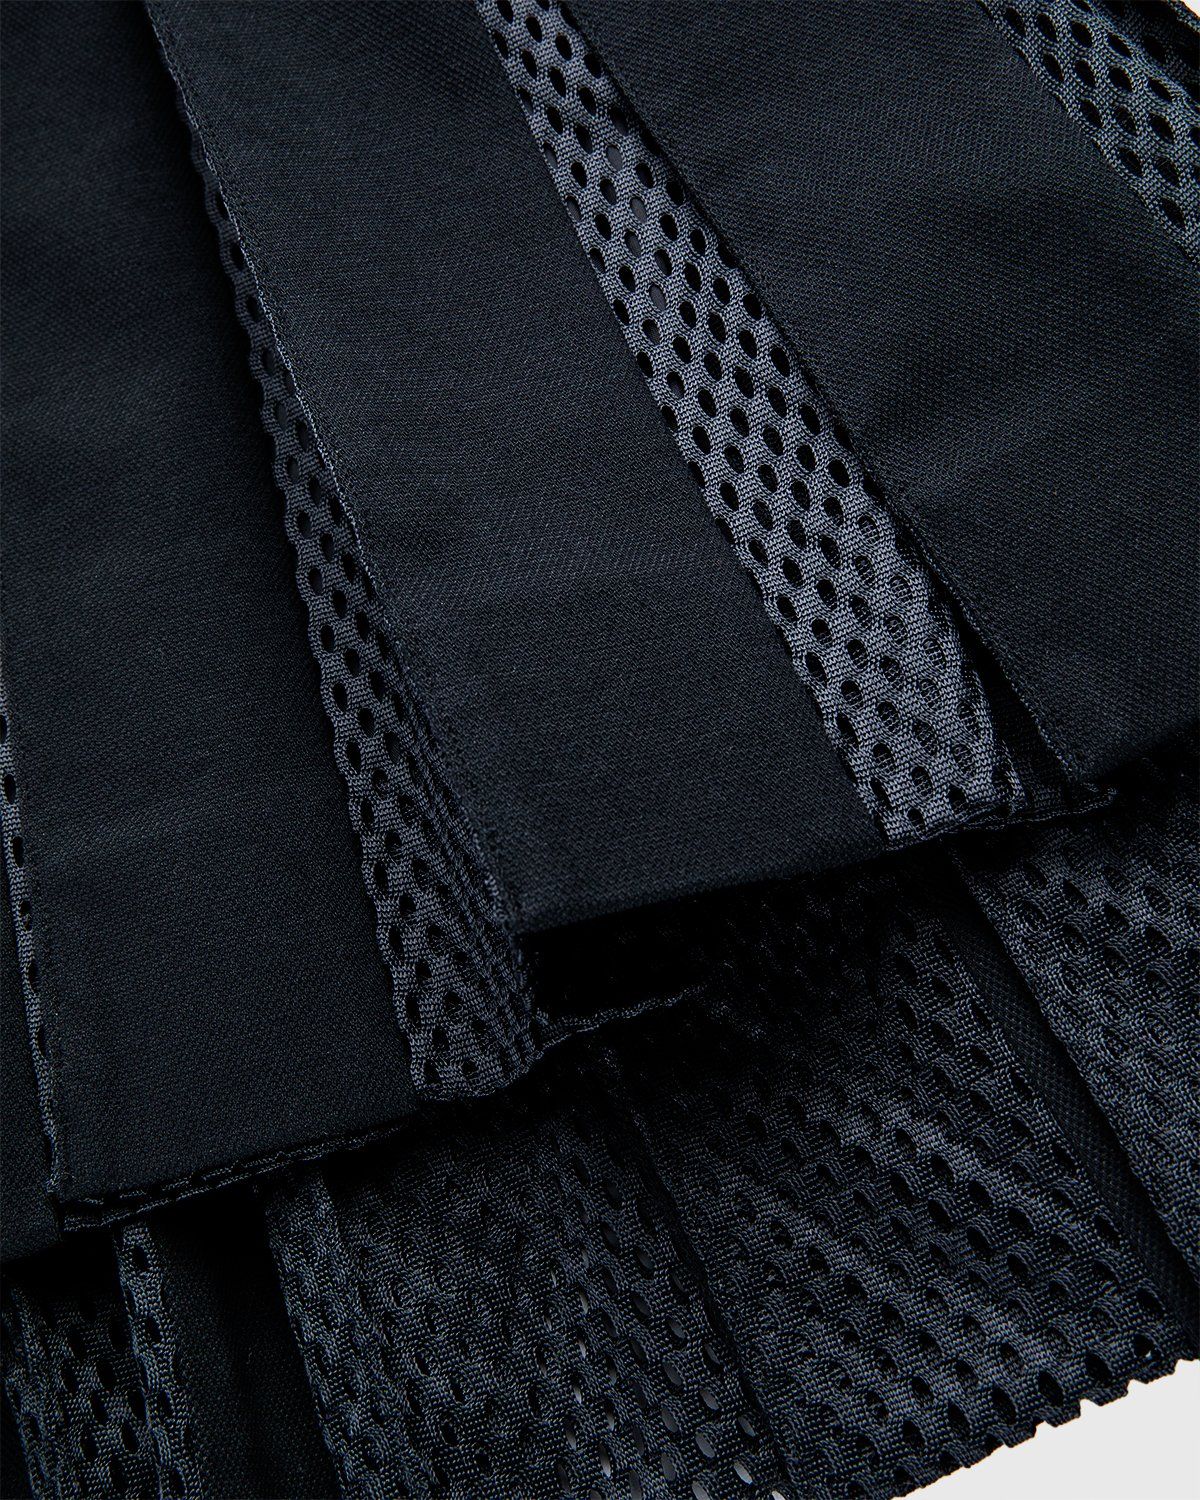 Thom Browne x Highsnobiety – Women’s Pleated Mesh Skirt Black - Suits - Black - Image 6